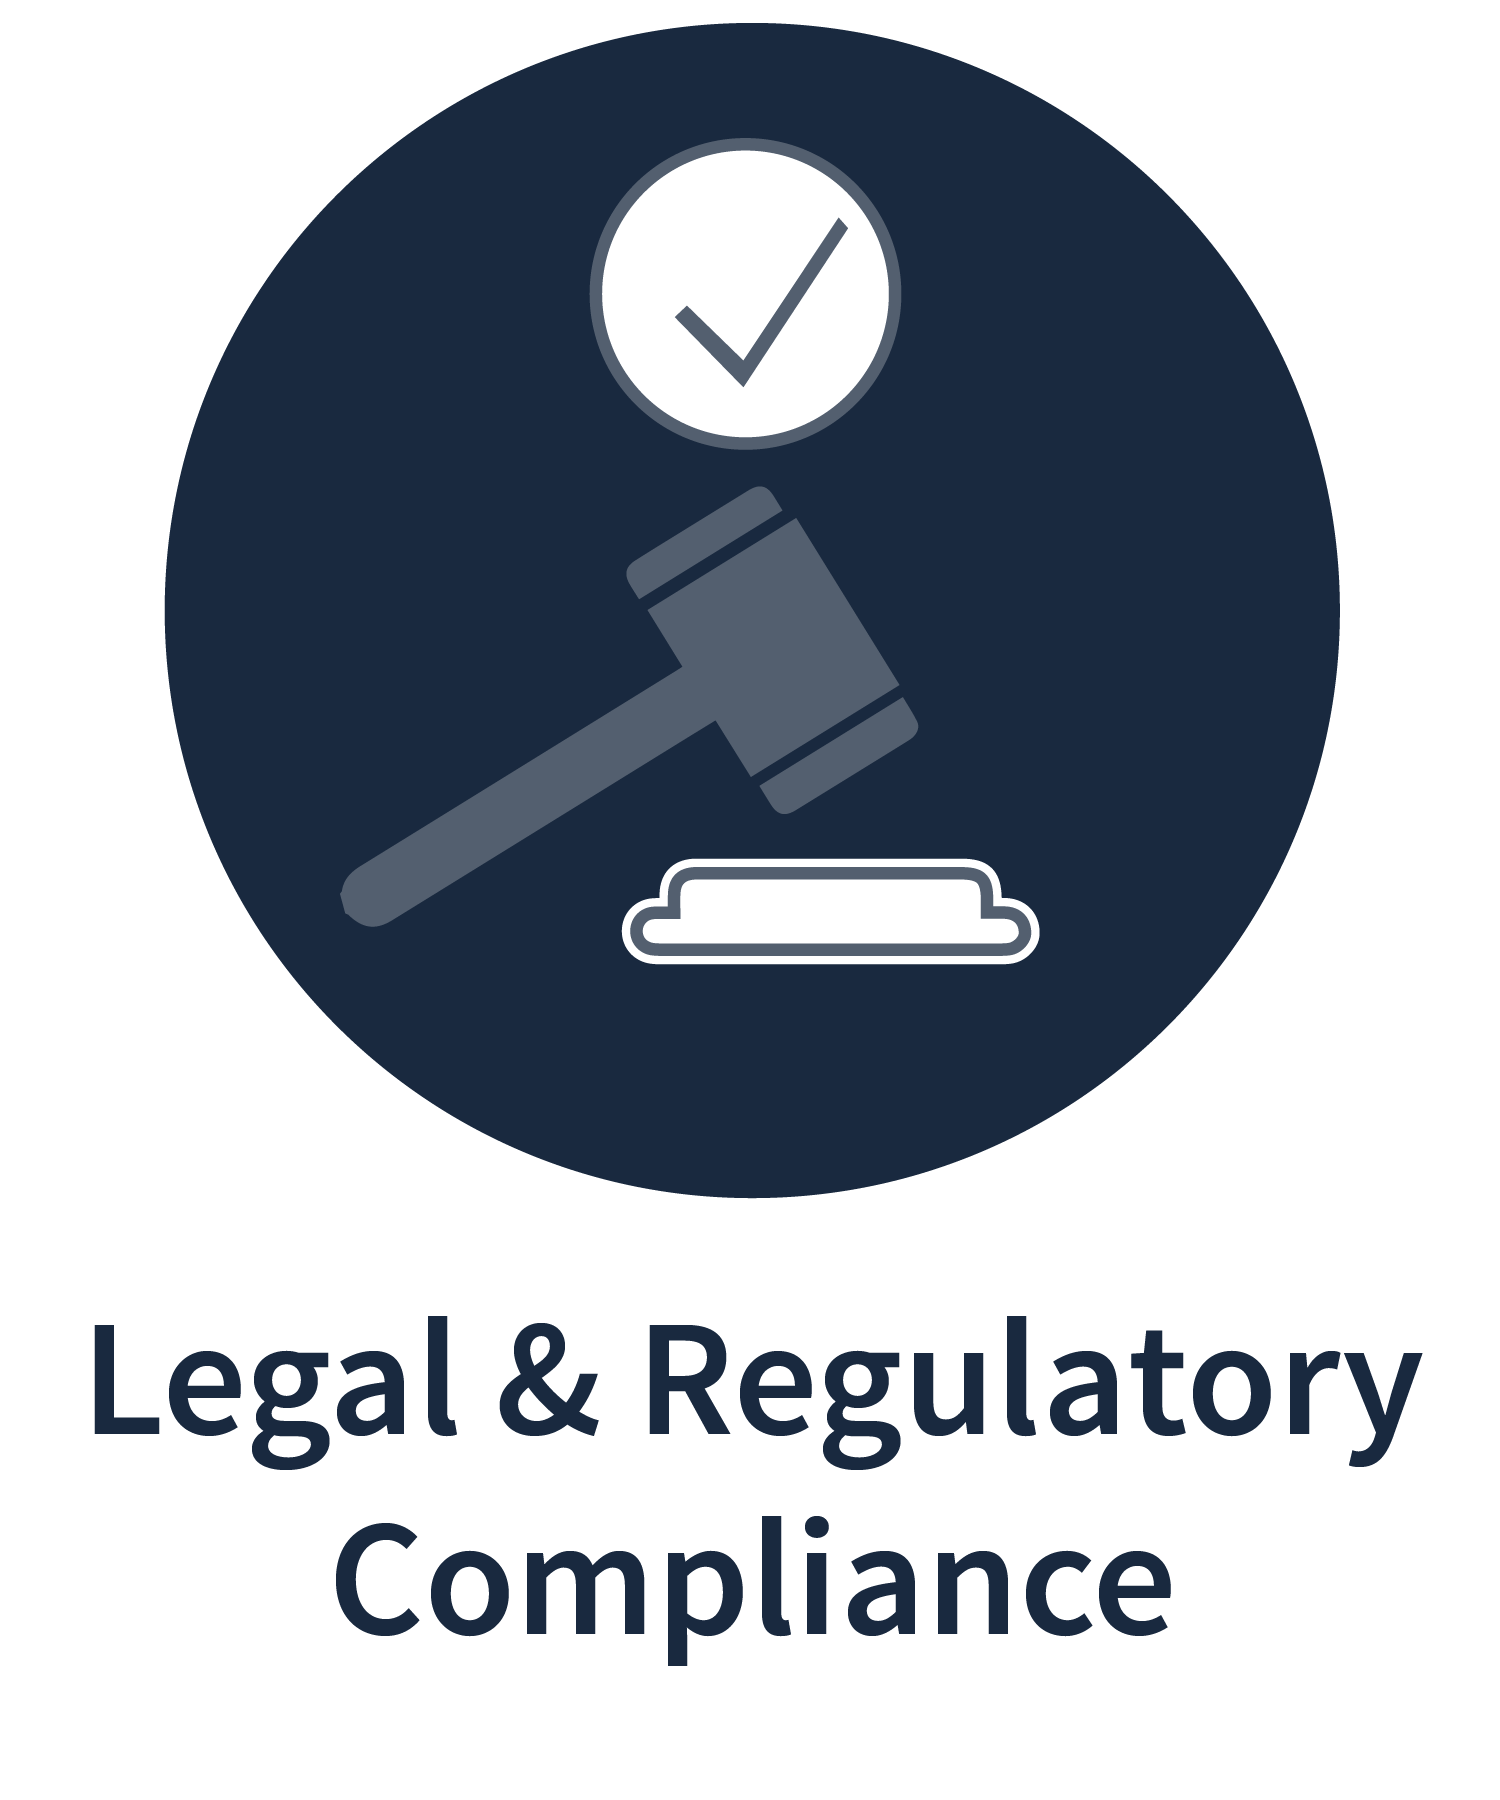 Legal & Regulatory Compliance